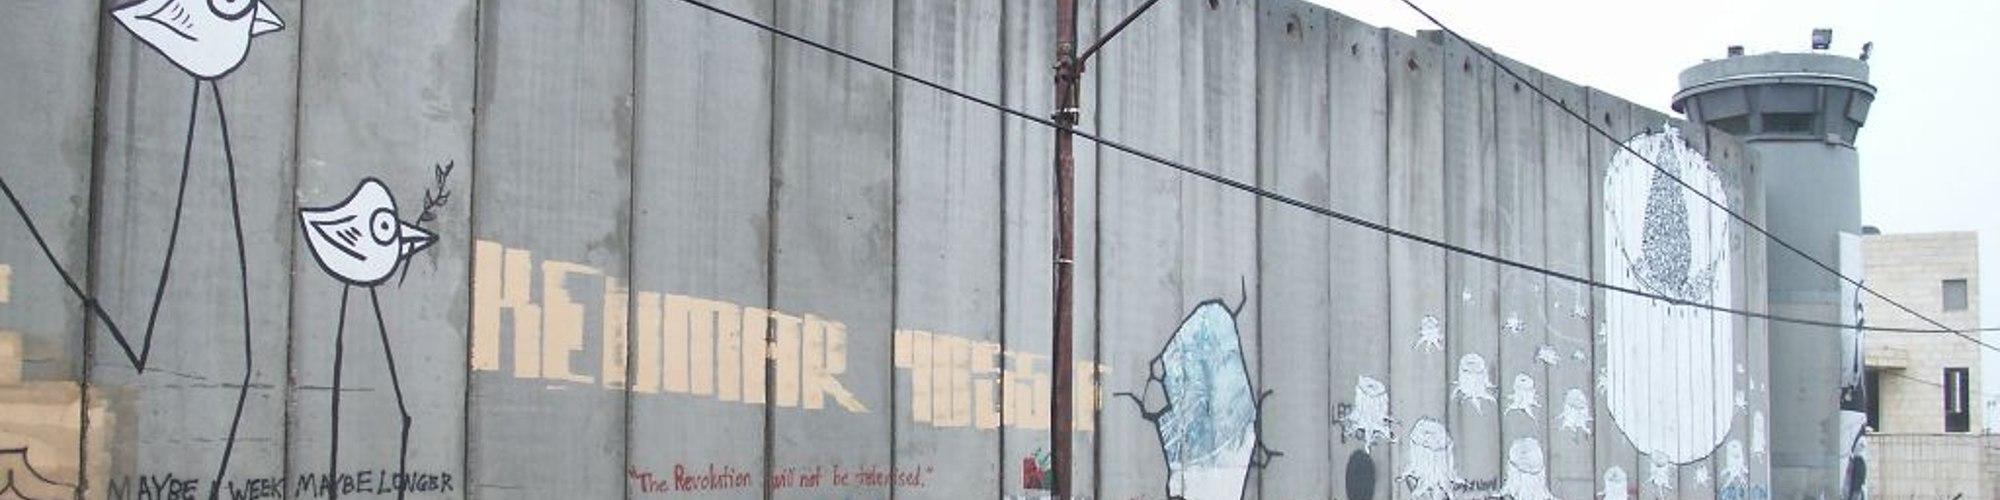 De muur in Palestina, bedekt met graffiti